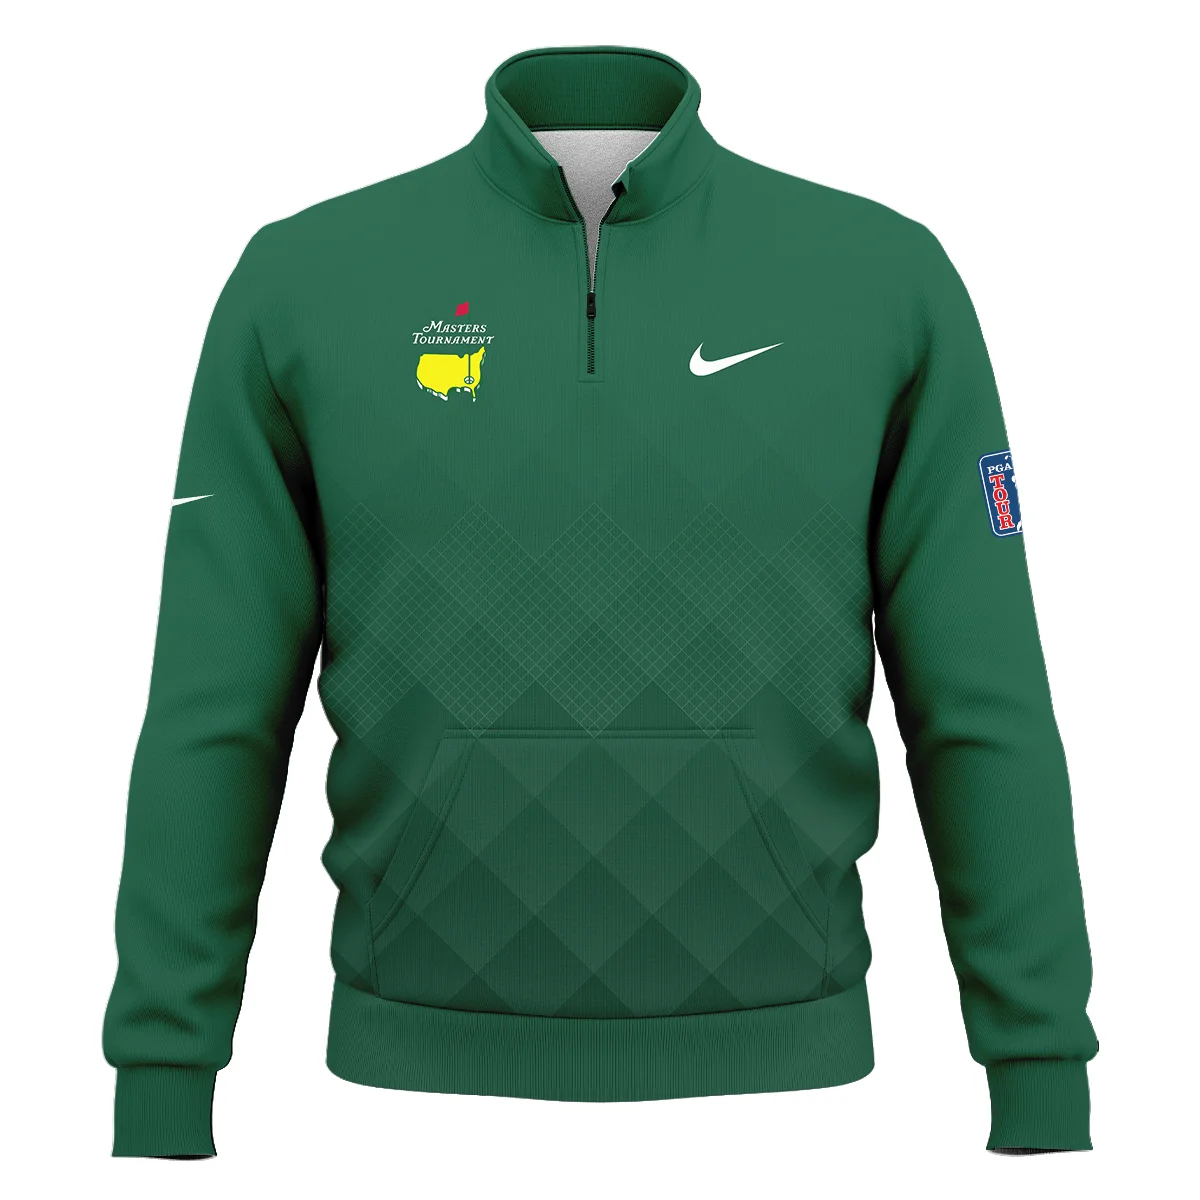 Masters Tournament Nike Gradient Dark Green Pattern Long Polo Shirt Style Classic Long Polo Shirt For Men